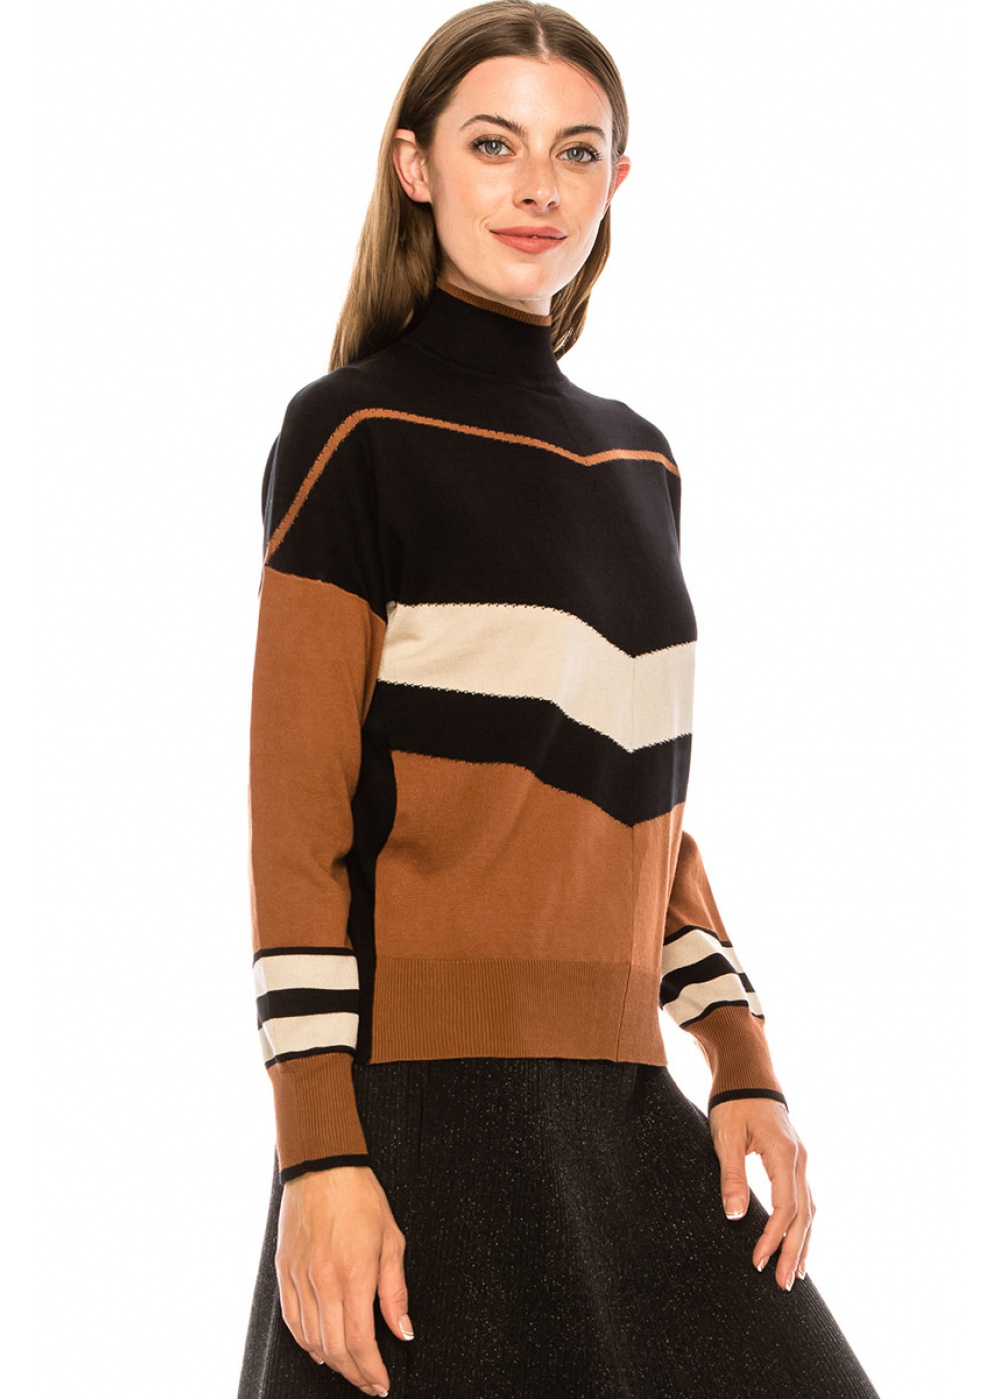 Color block striped sweater in rust